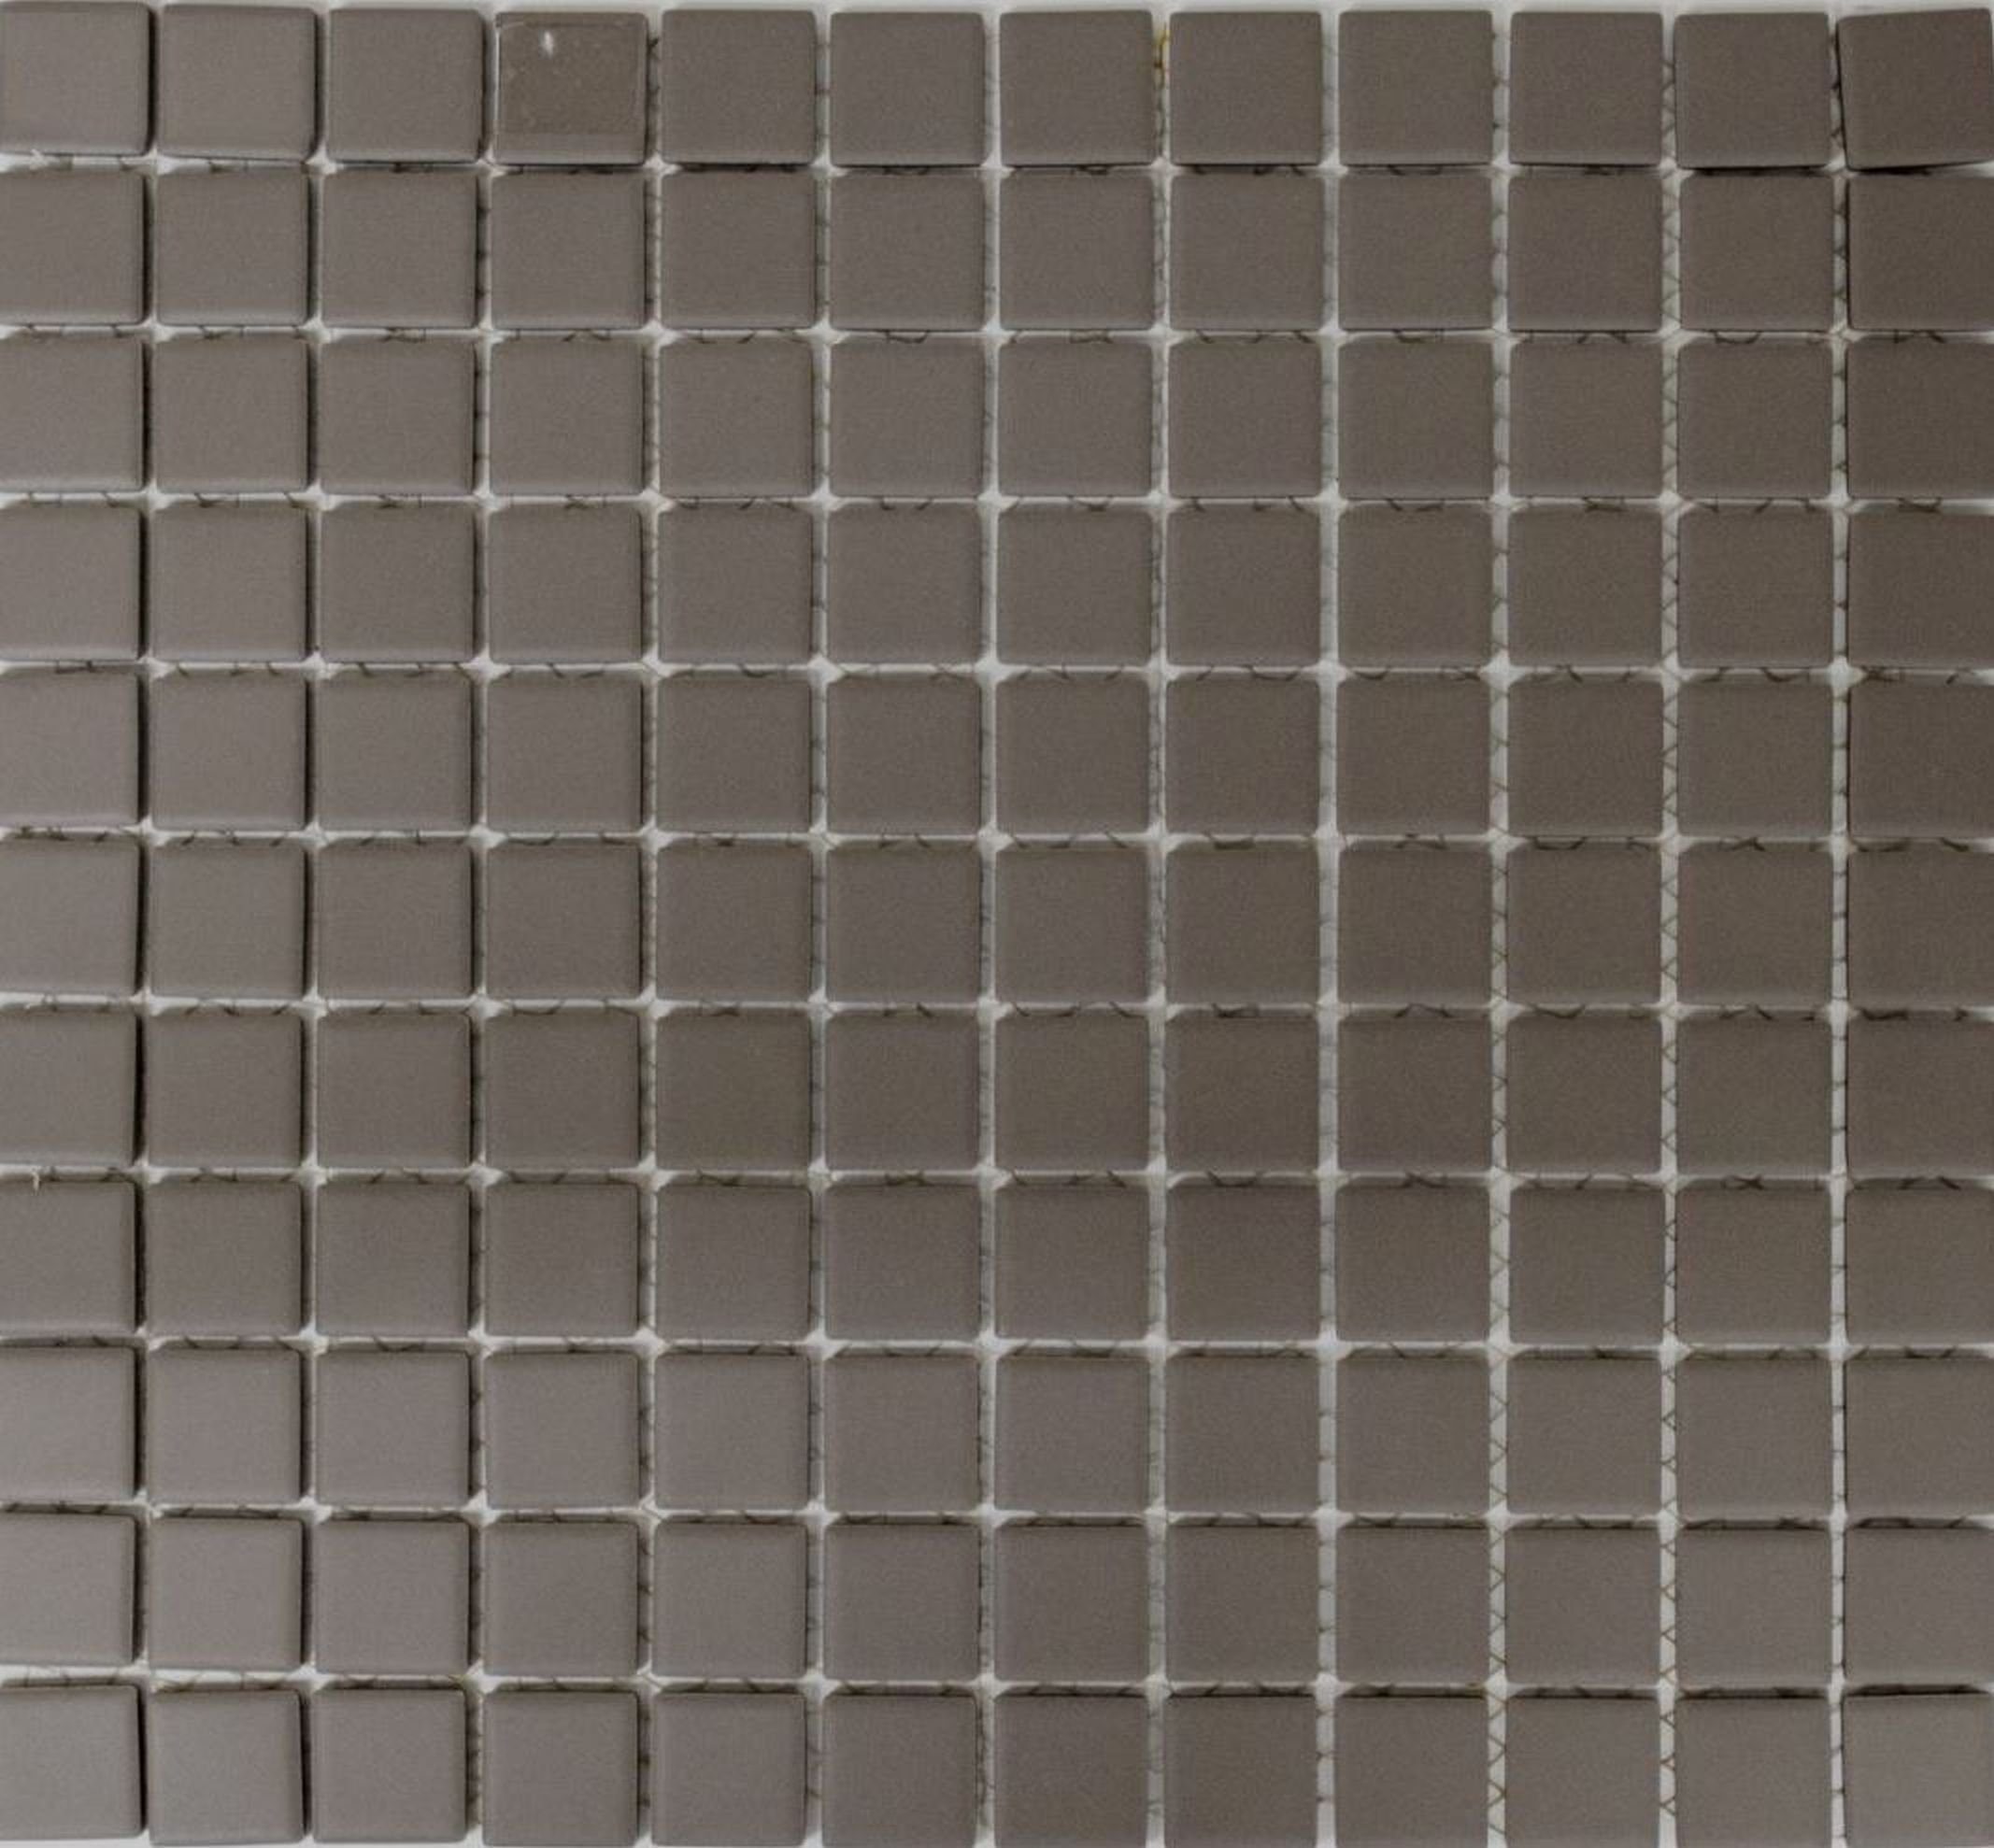 Mosani Mosaikfliesen Mosaik rutschsicher Boden unglasiert Fliese Küche Keramik graubraun